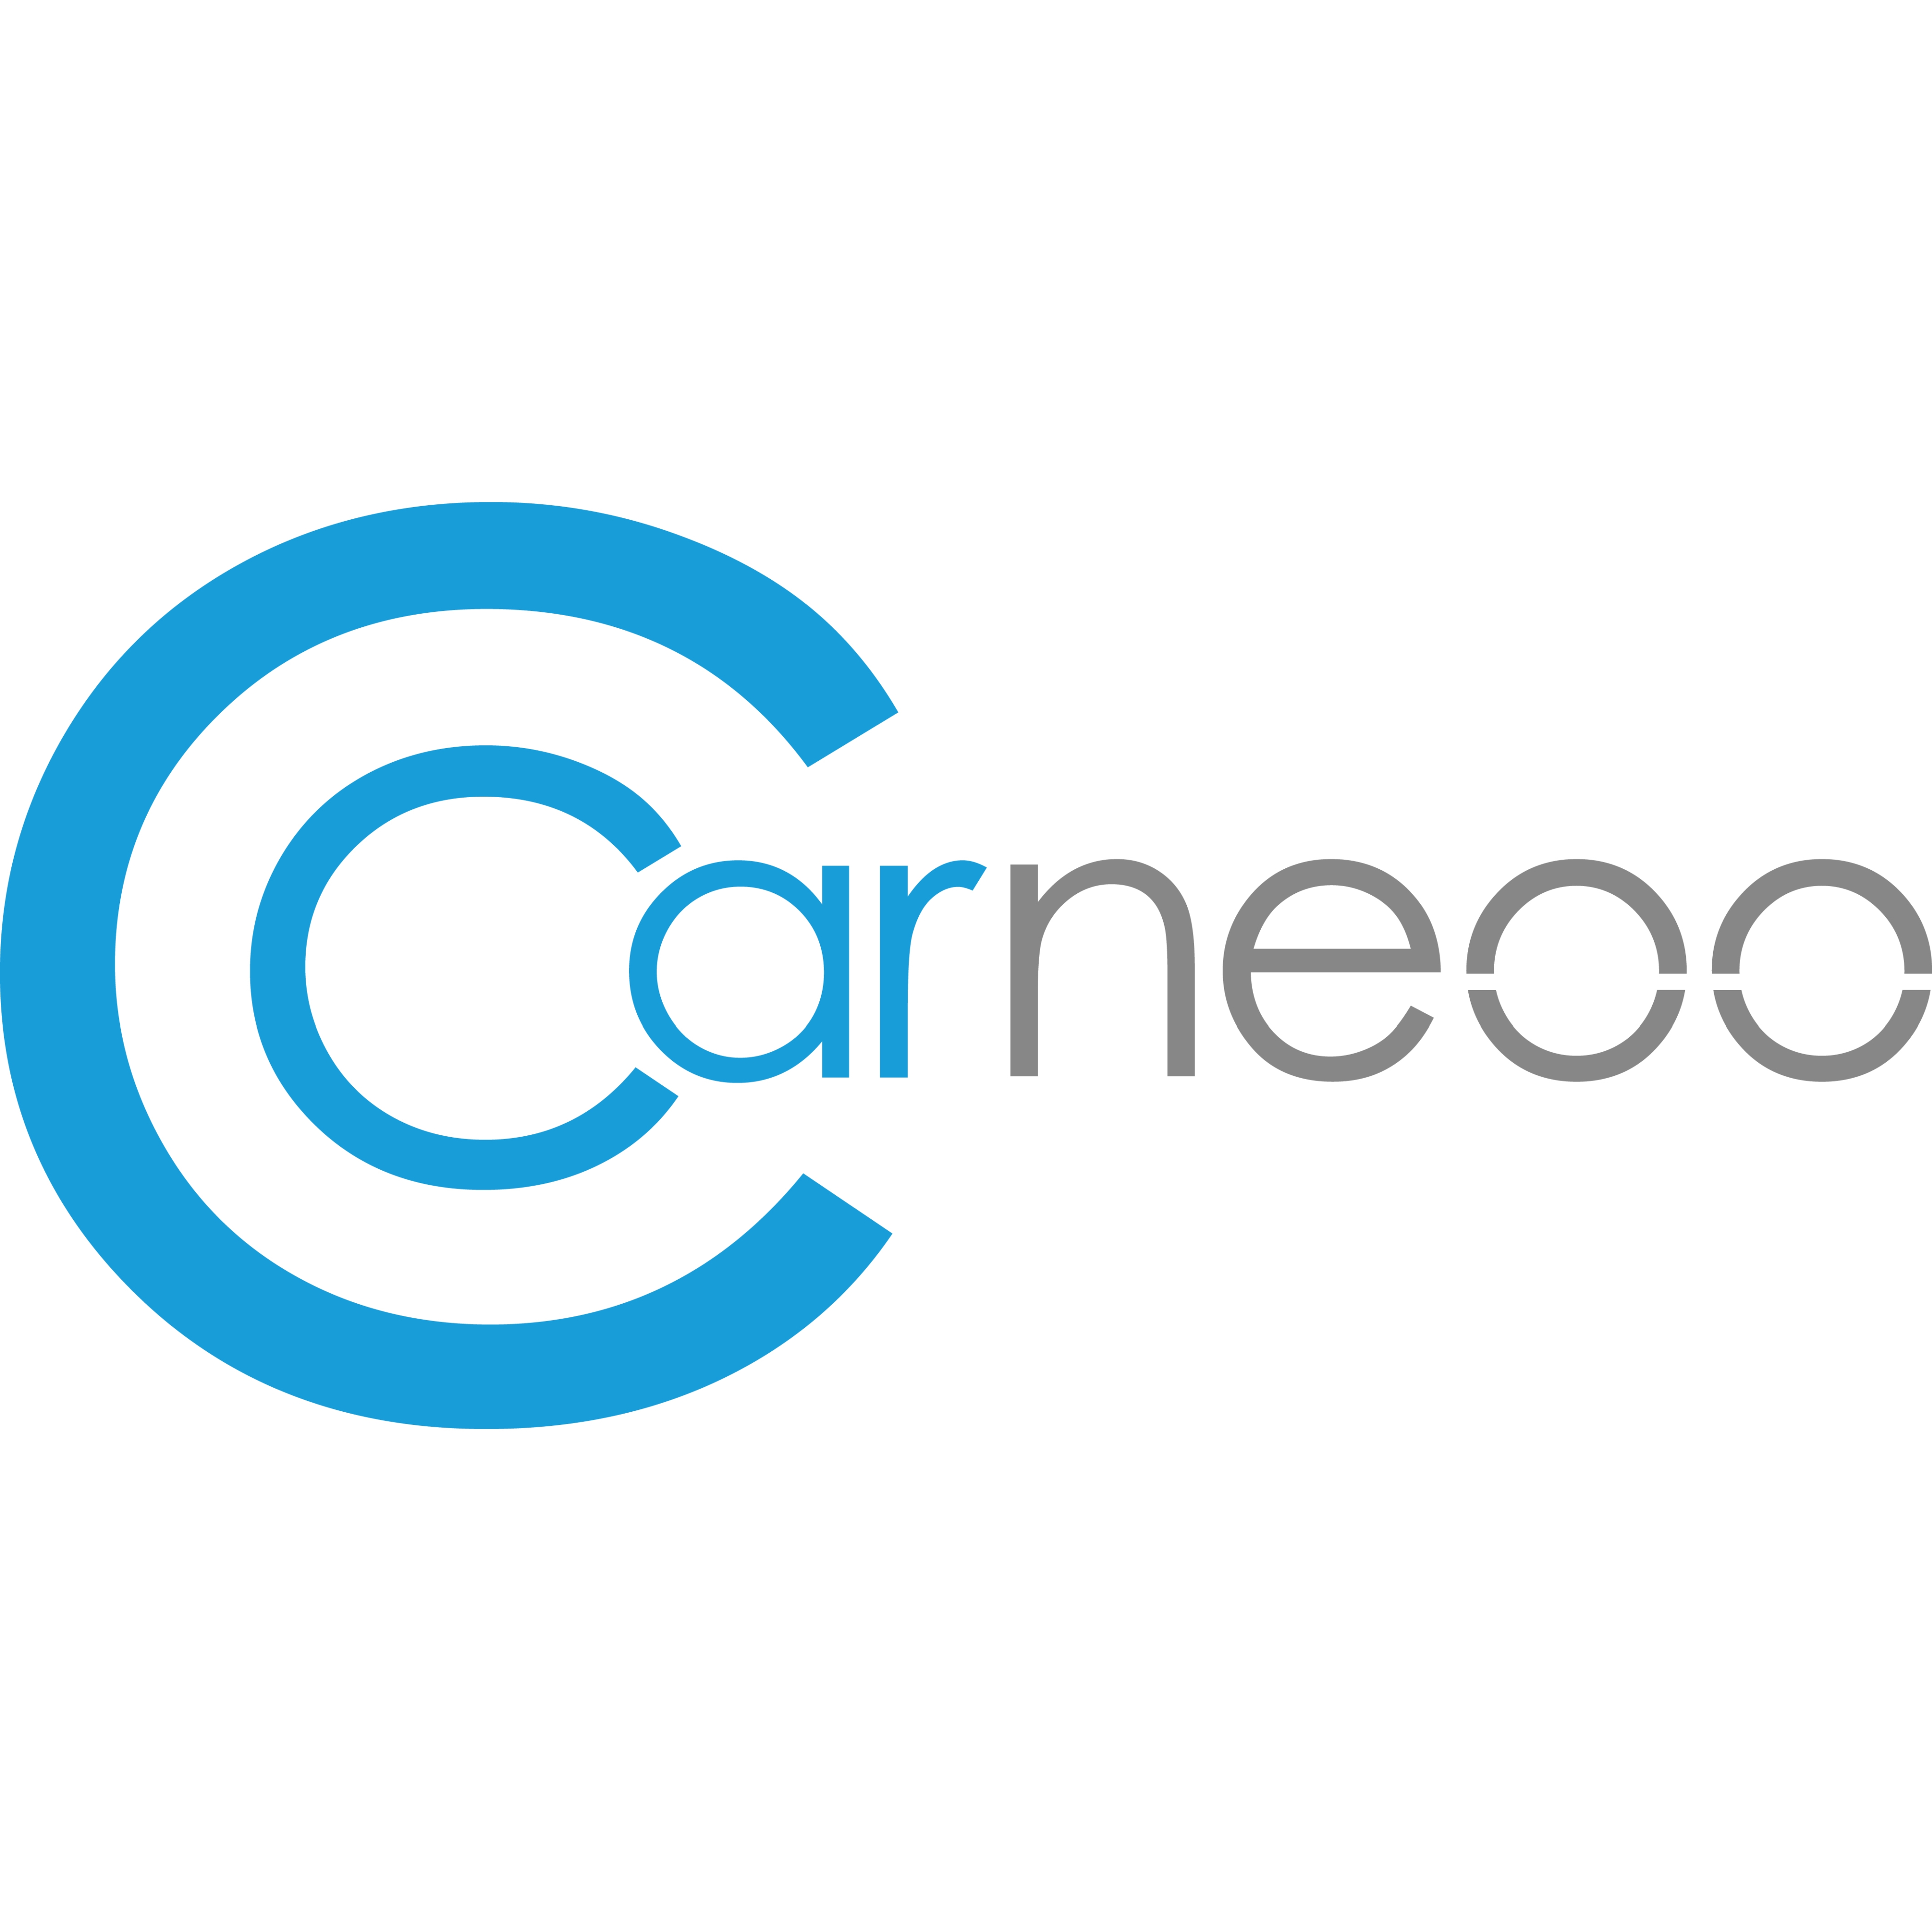 Carneoo GmbH in Düsseldorf